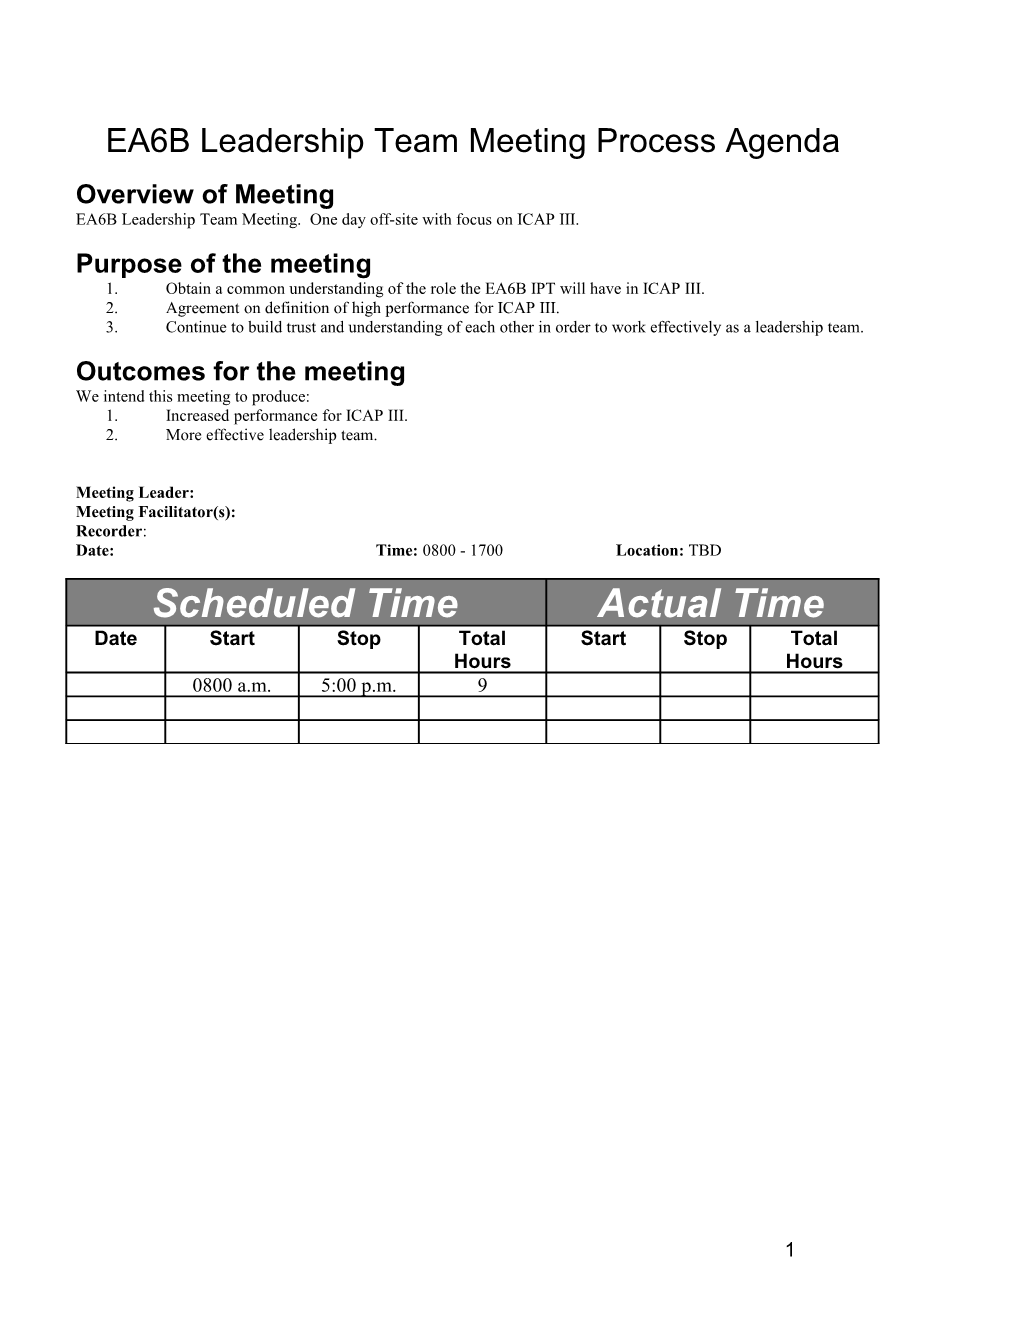 Meeting Process Agenda